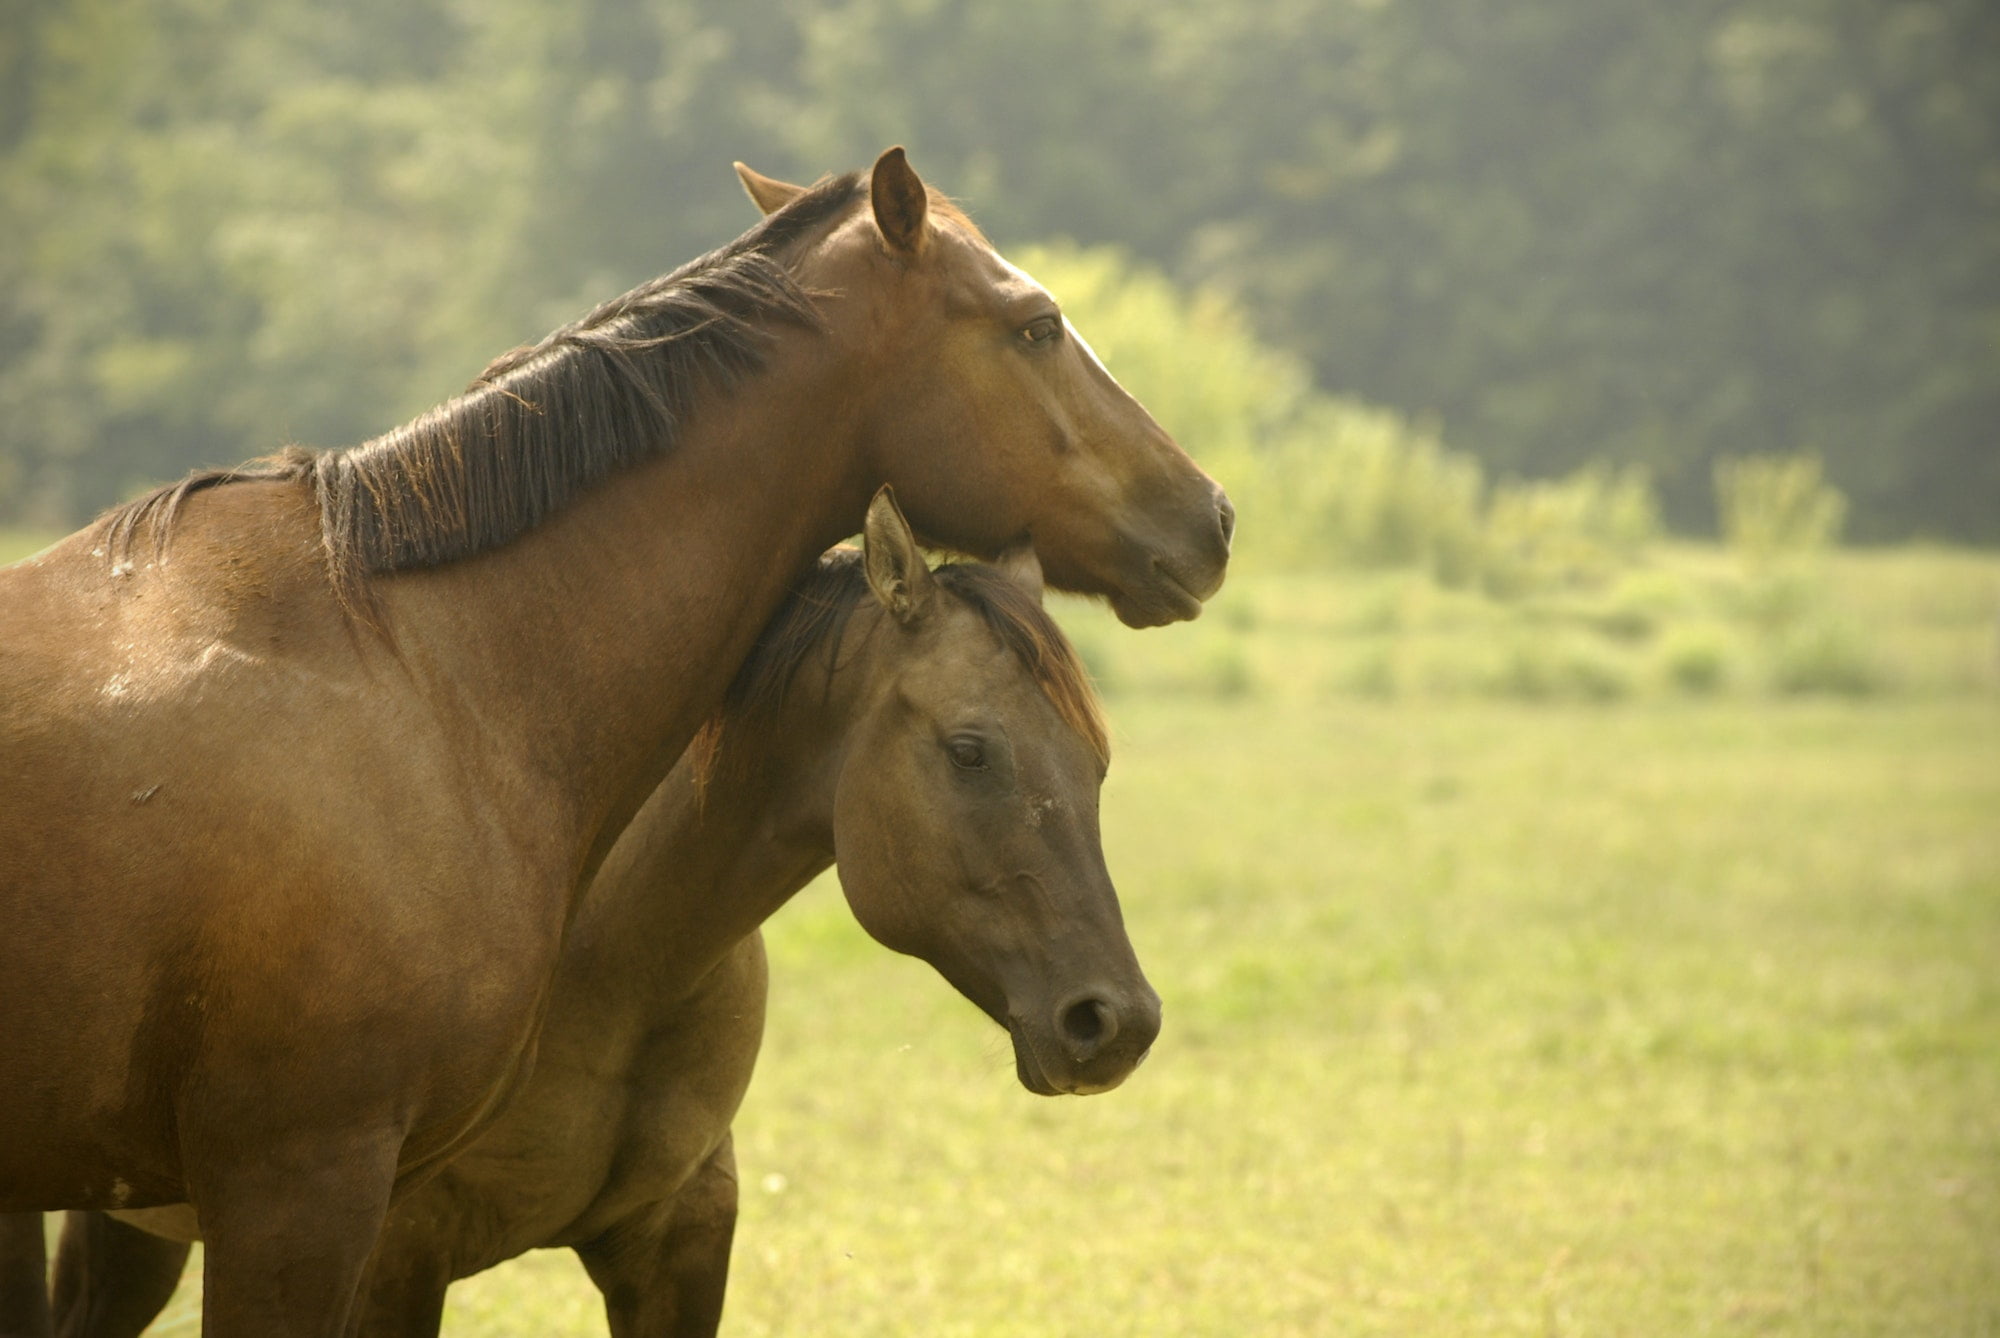 Two quarter horses in a Missouri pasture